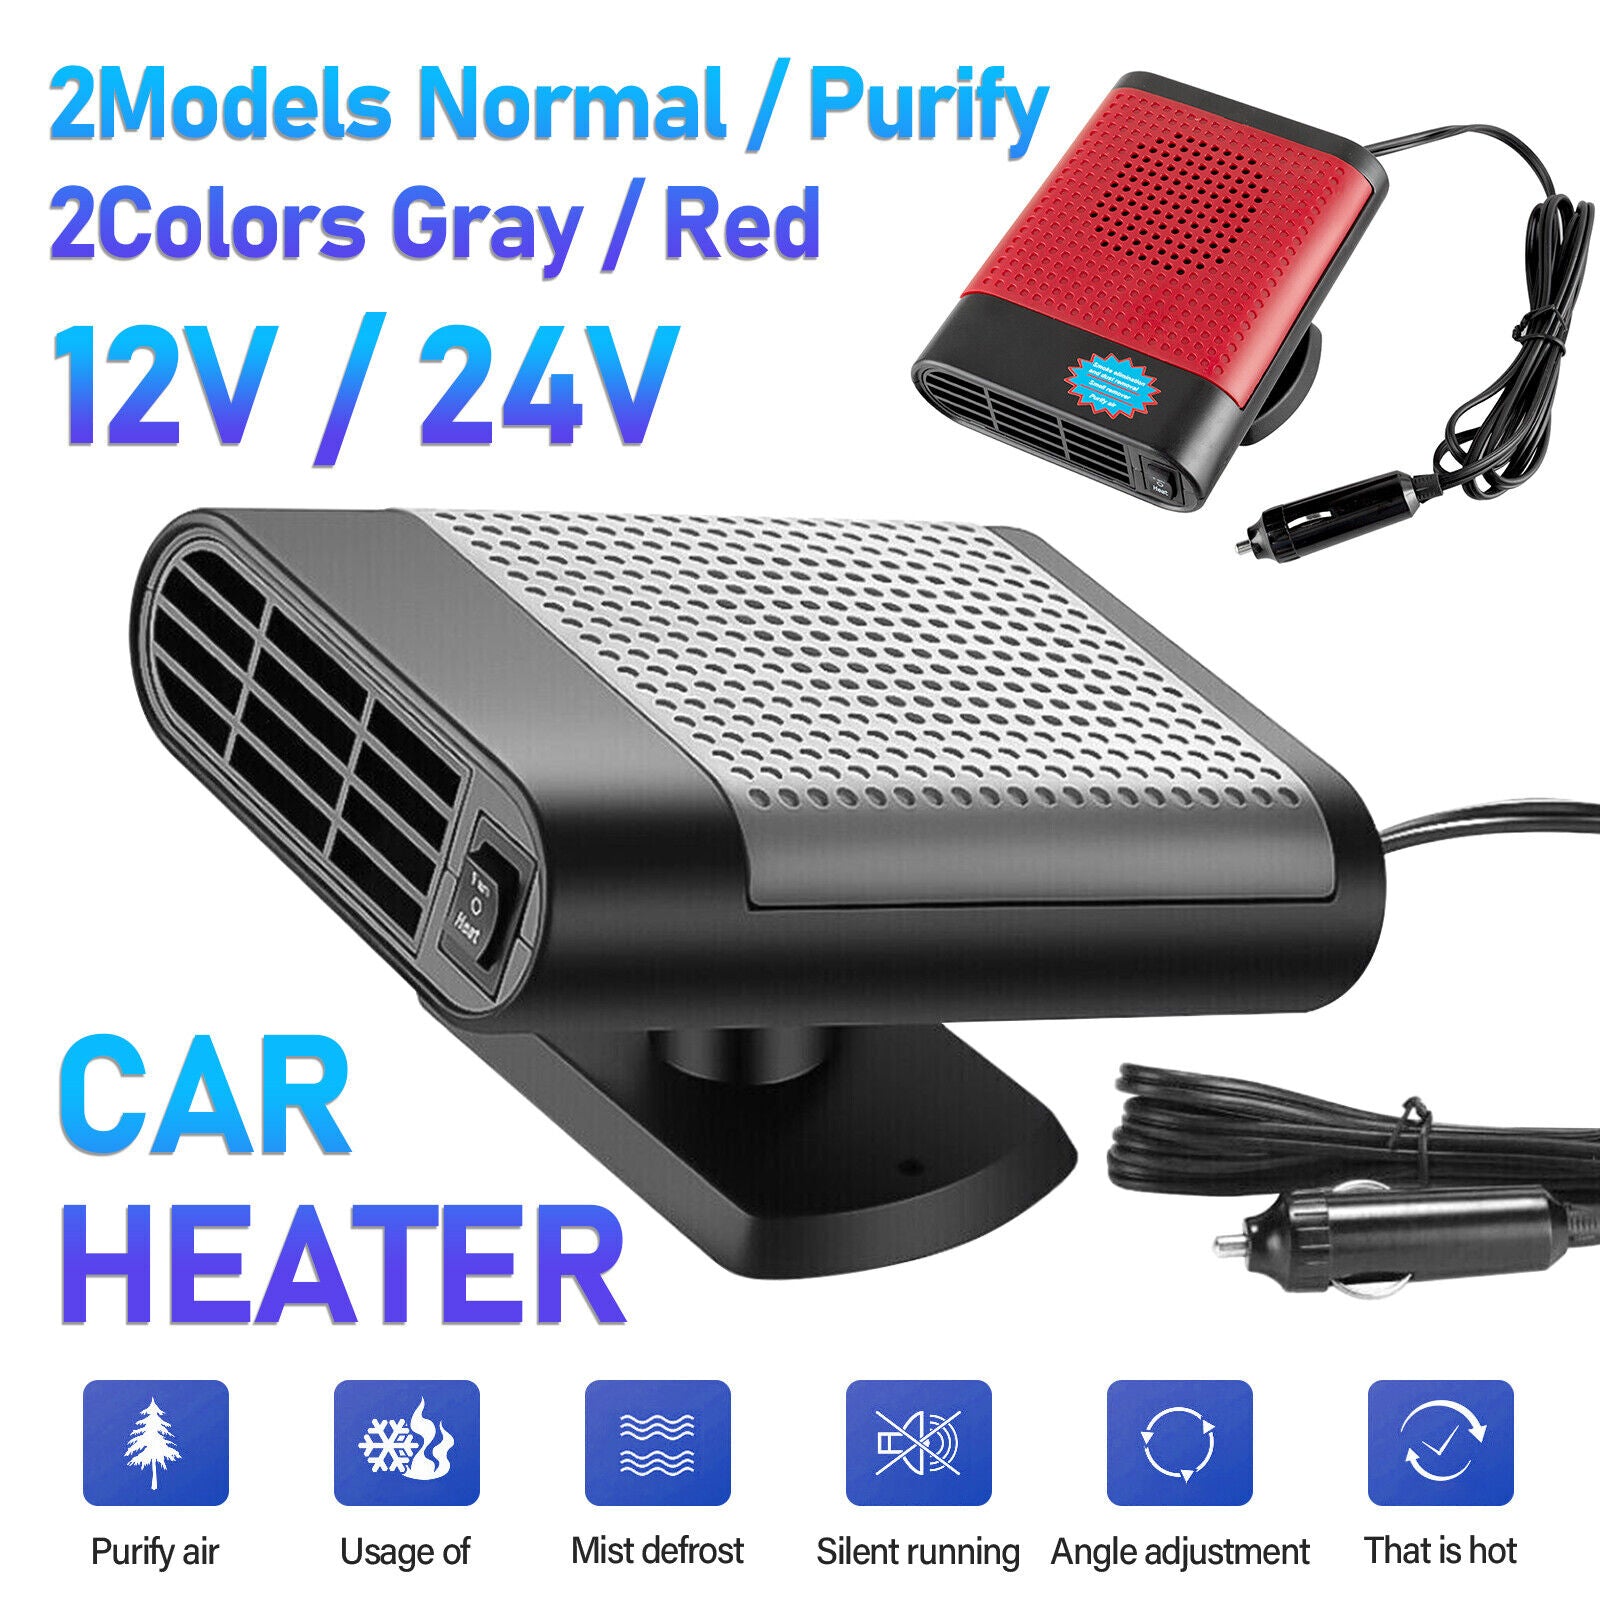 12V 500W CAR Heater Portable Electric Heating Fan Defogger Dem I3O5 EUR  18,83 - PicClick FR